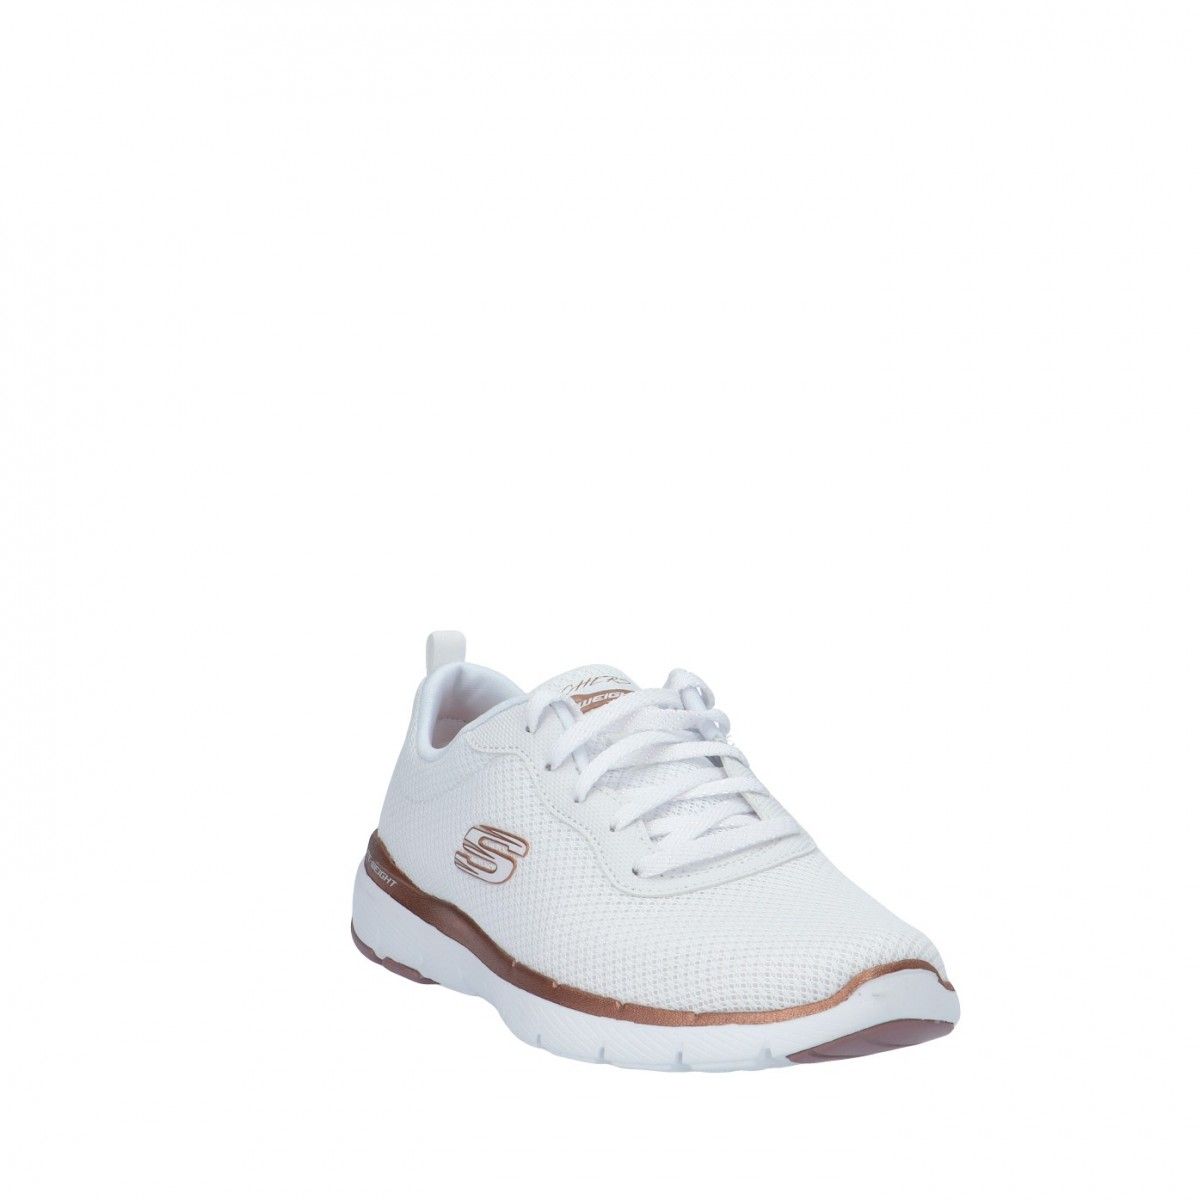 Skechers Sneaker Bianco/rose gold Gomma 13070